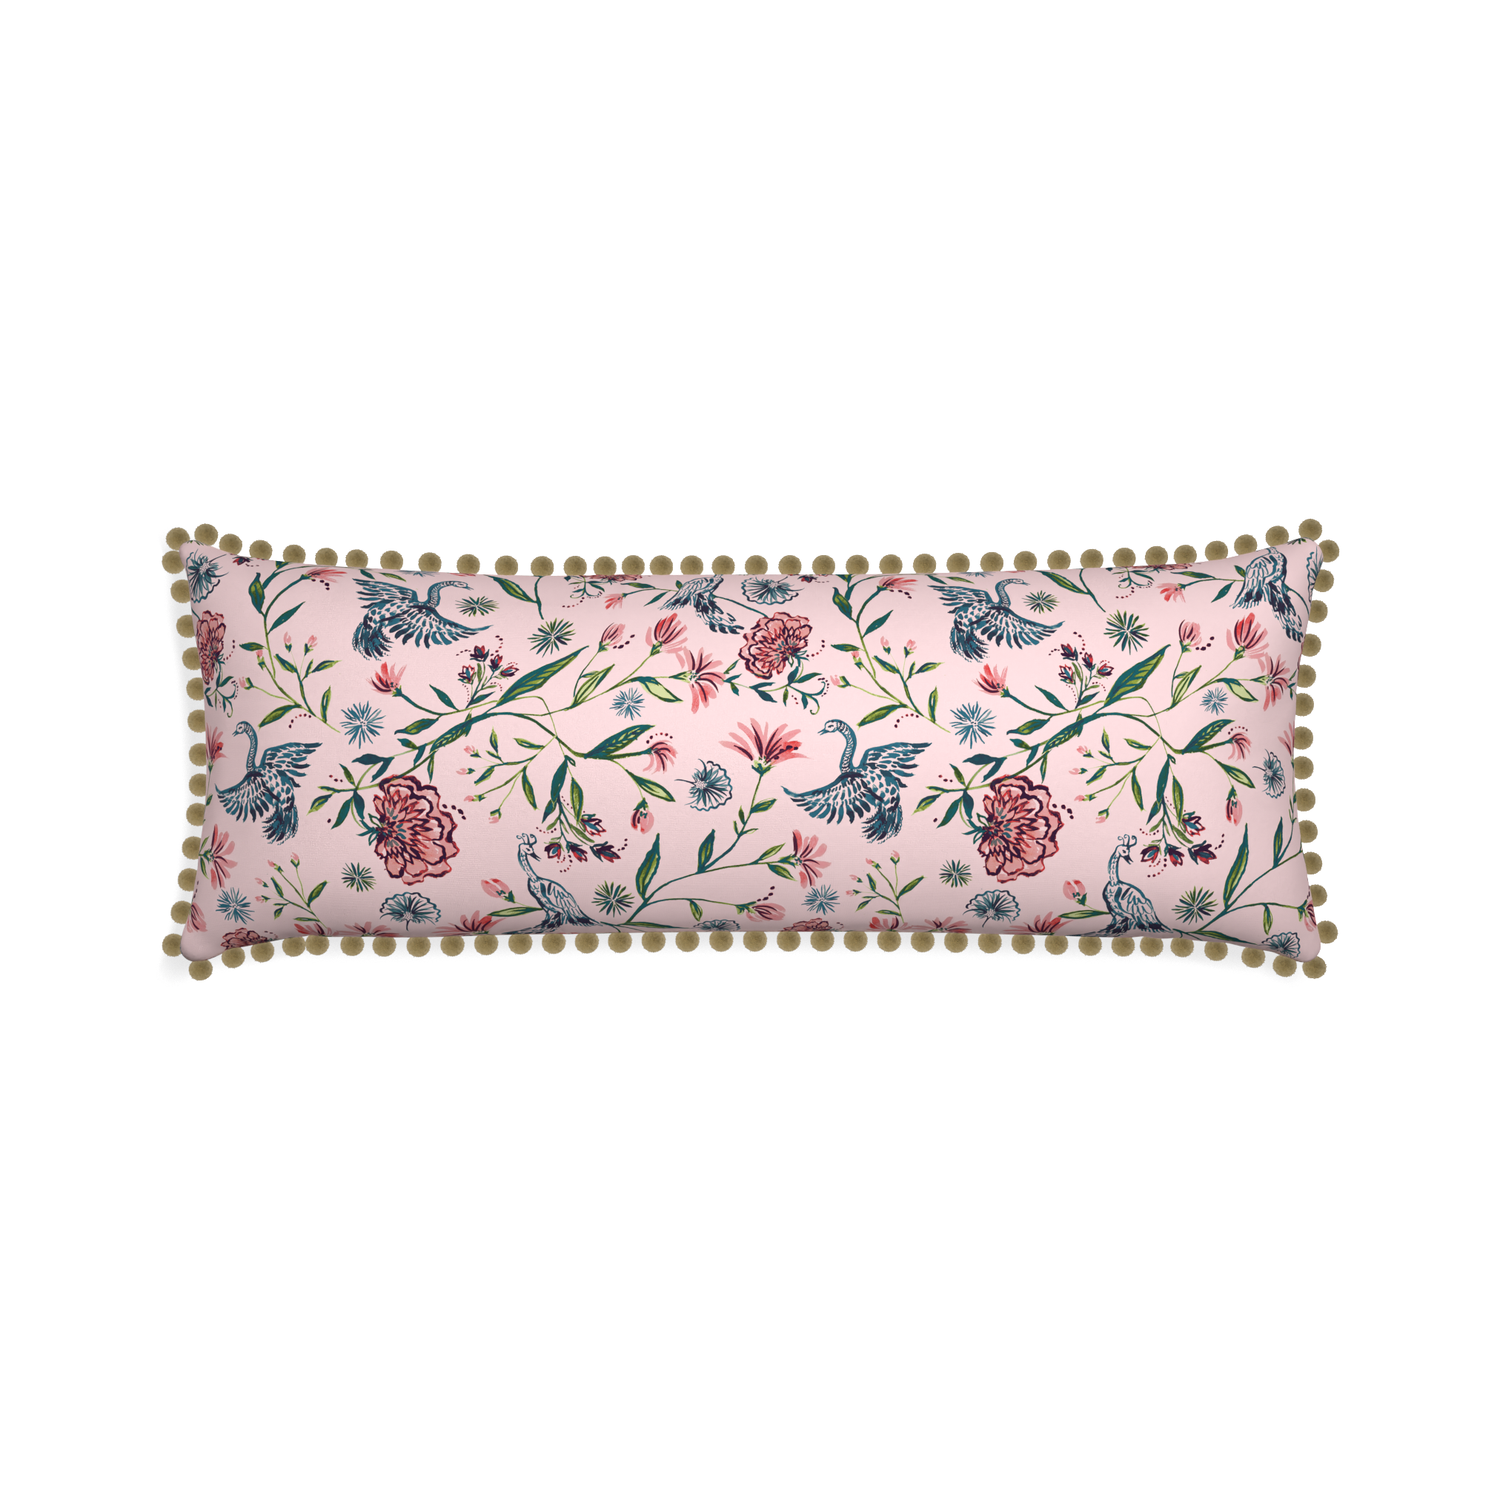 Xl-lumbar daphne rose custom pillow with olive pom pom on white background